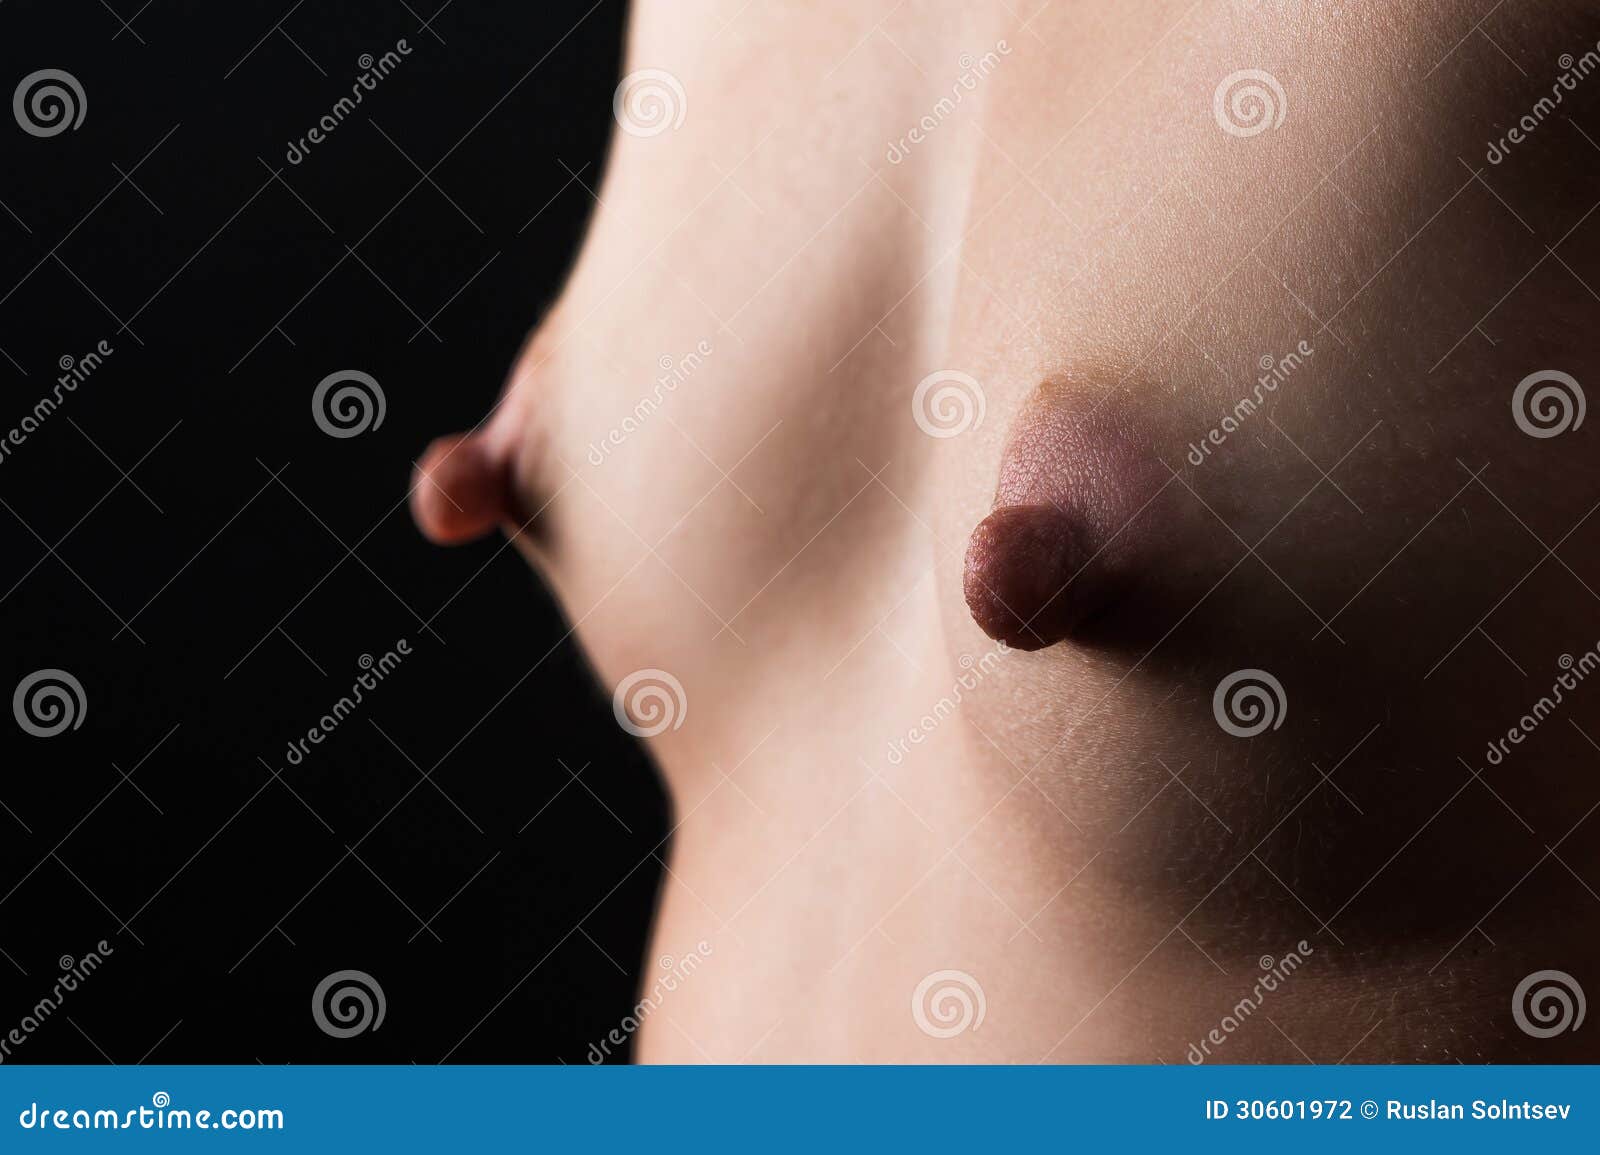 dajon wright share mature with long nipples photos